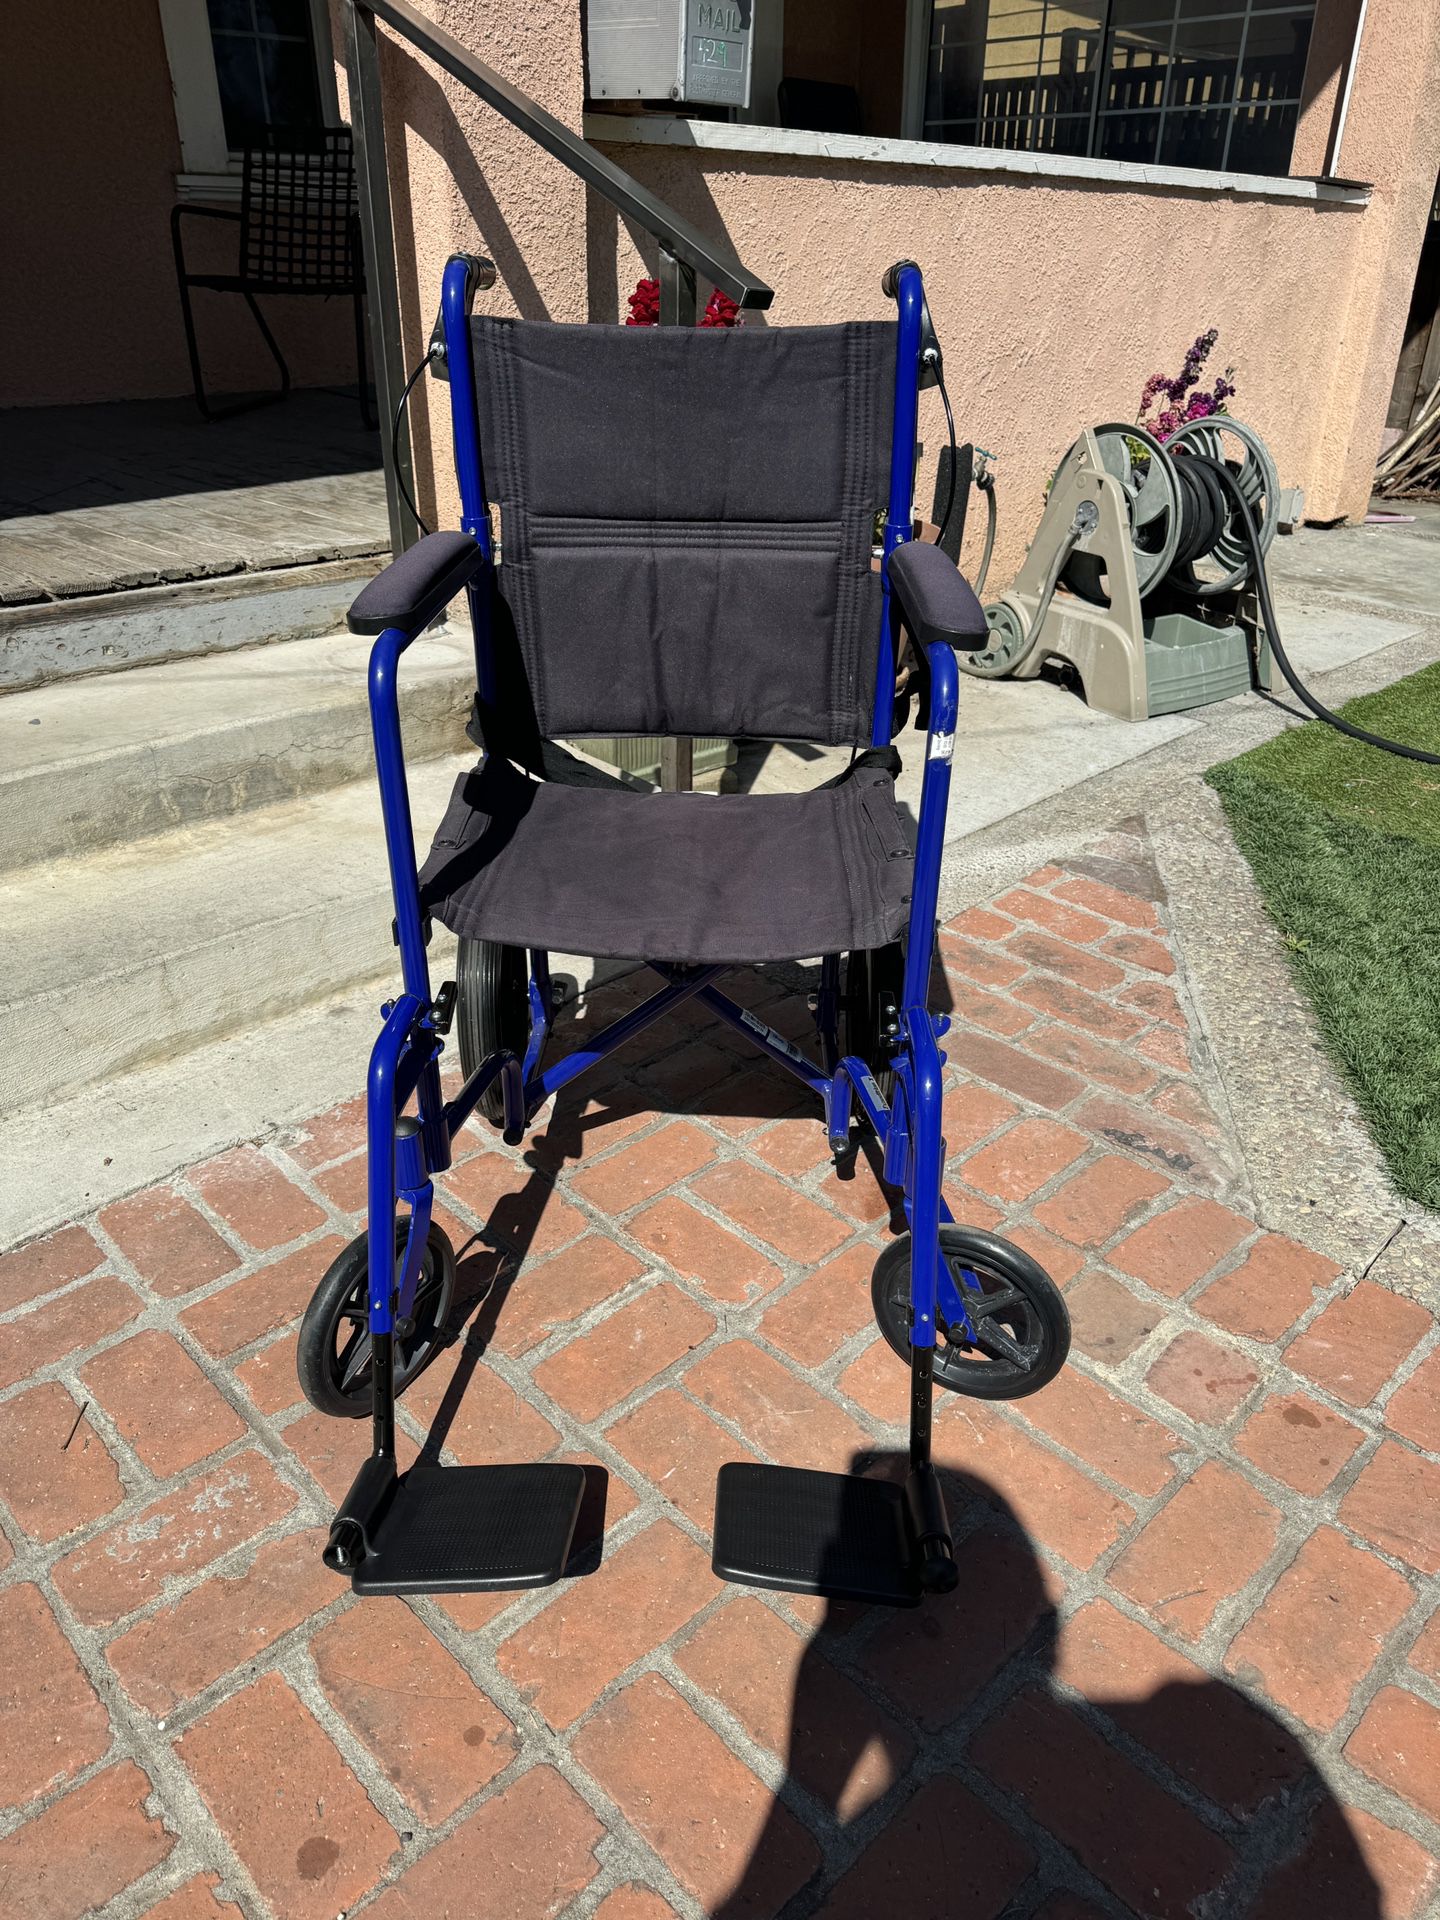 Like New Wheelchair $80